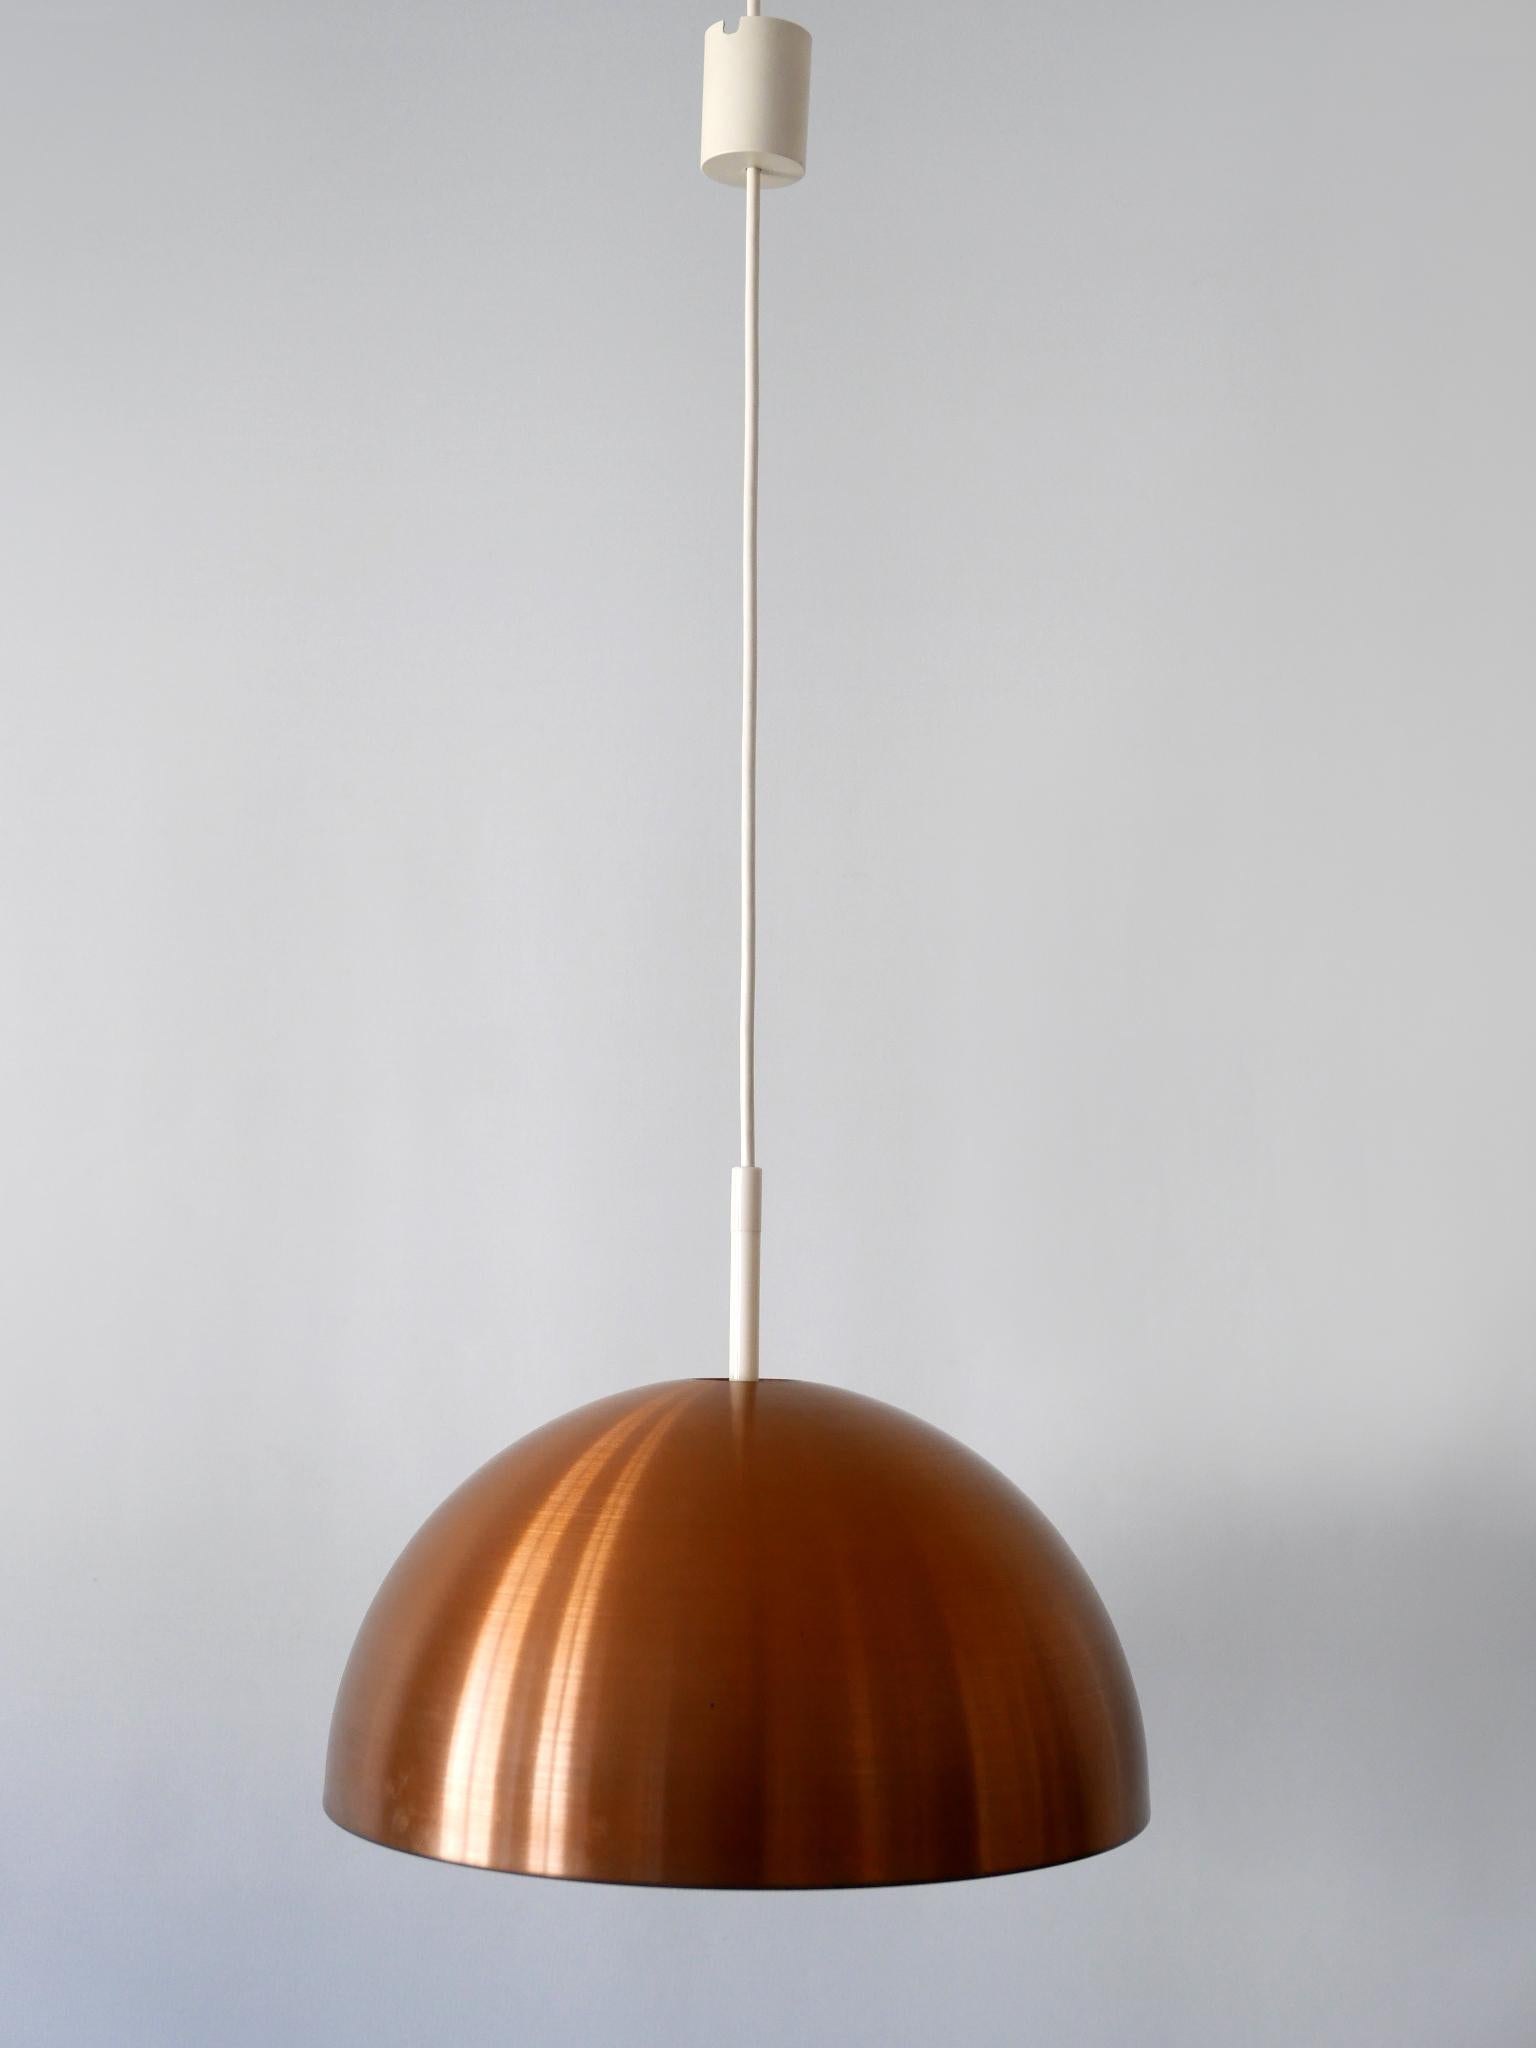 Elegant Mid-Century Modern Copper Pendant Lamp by Staff & Schwarz Germany, 1960s For Sale 1